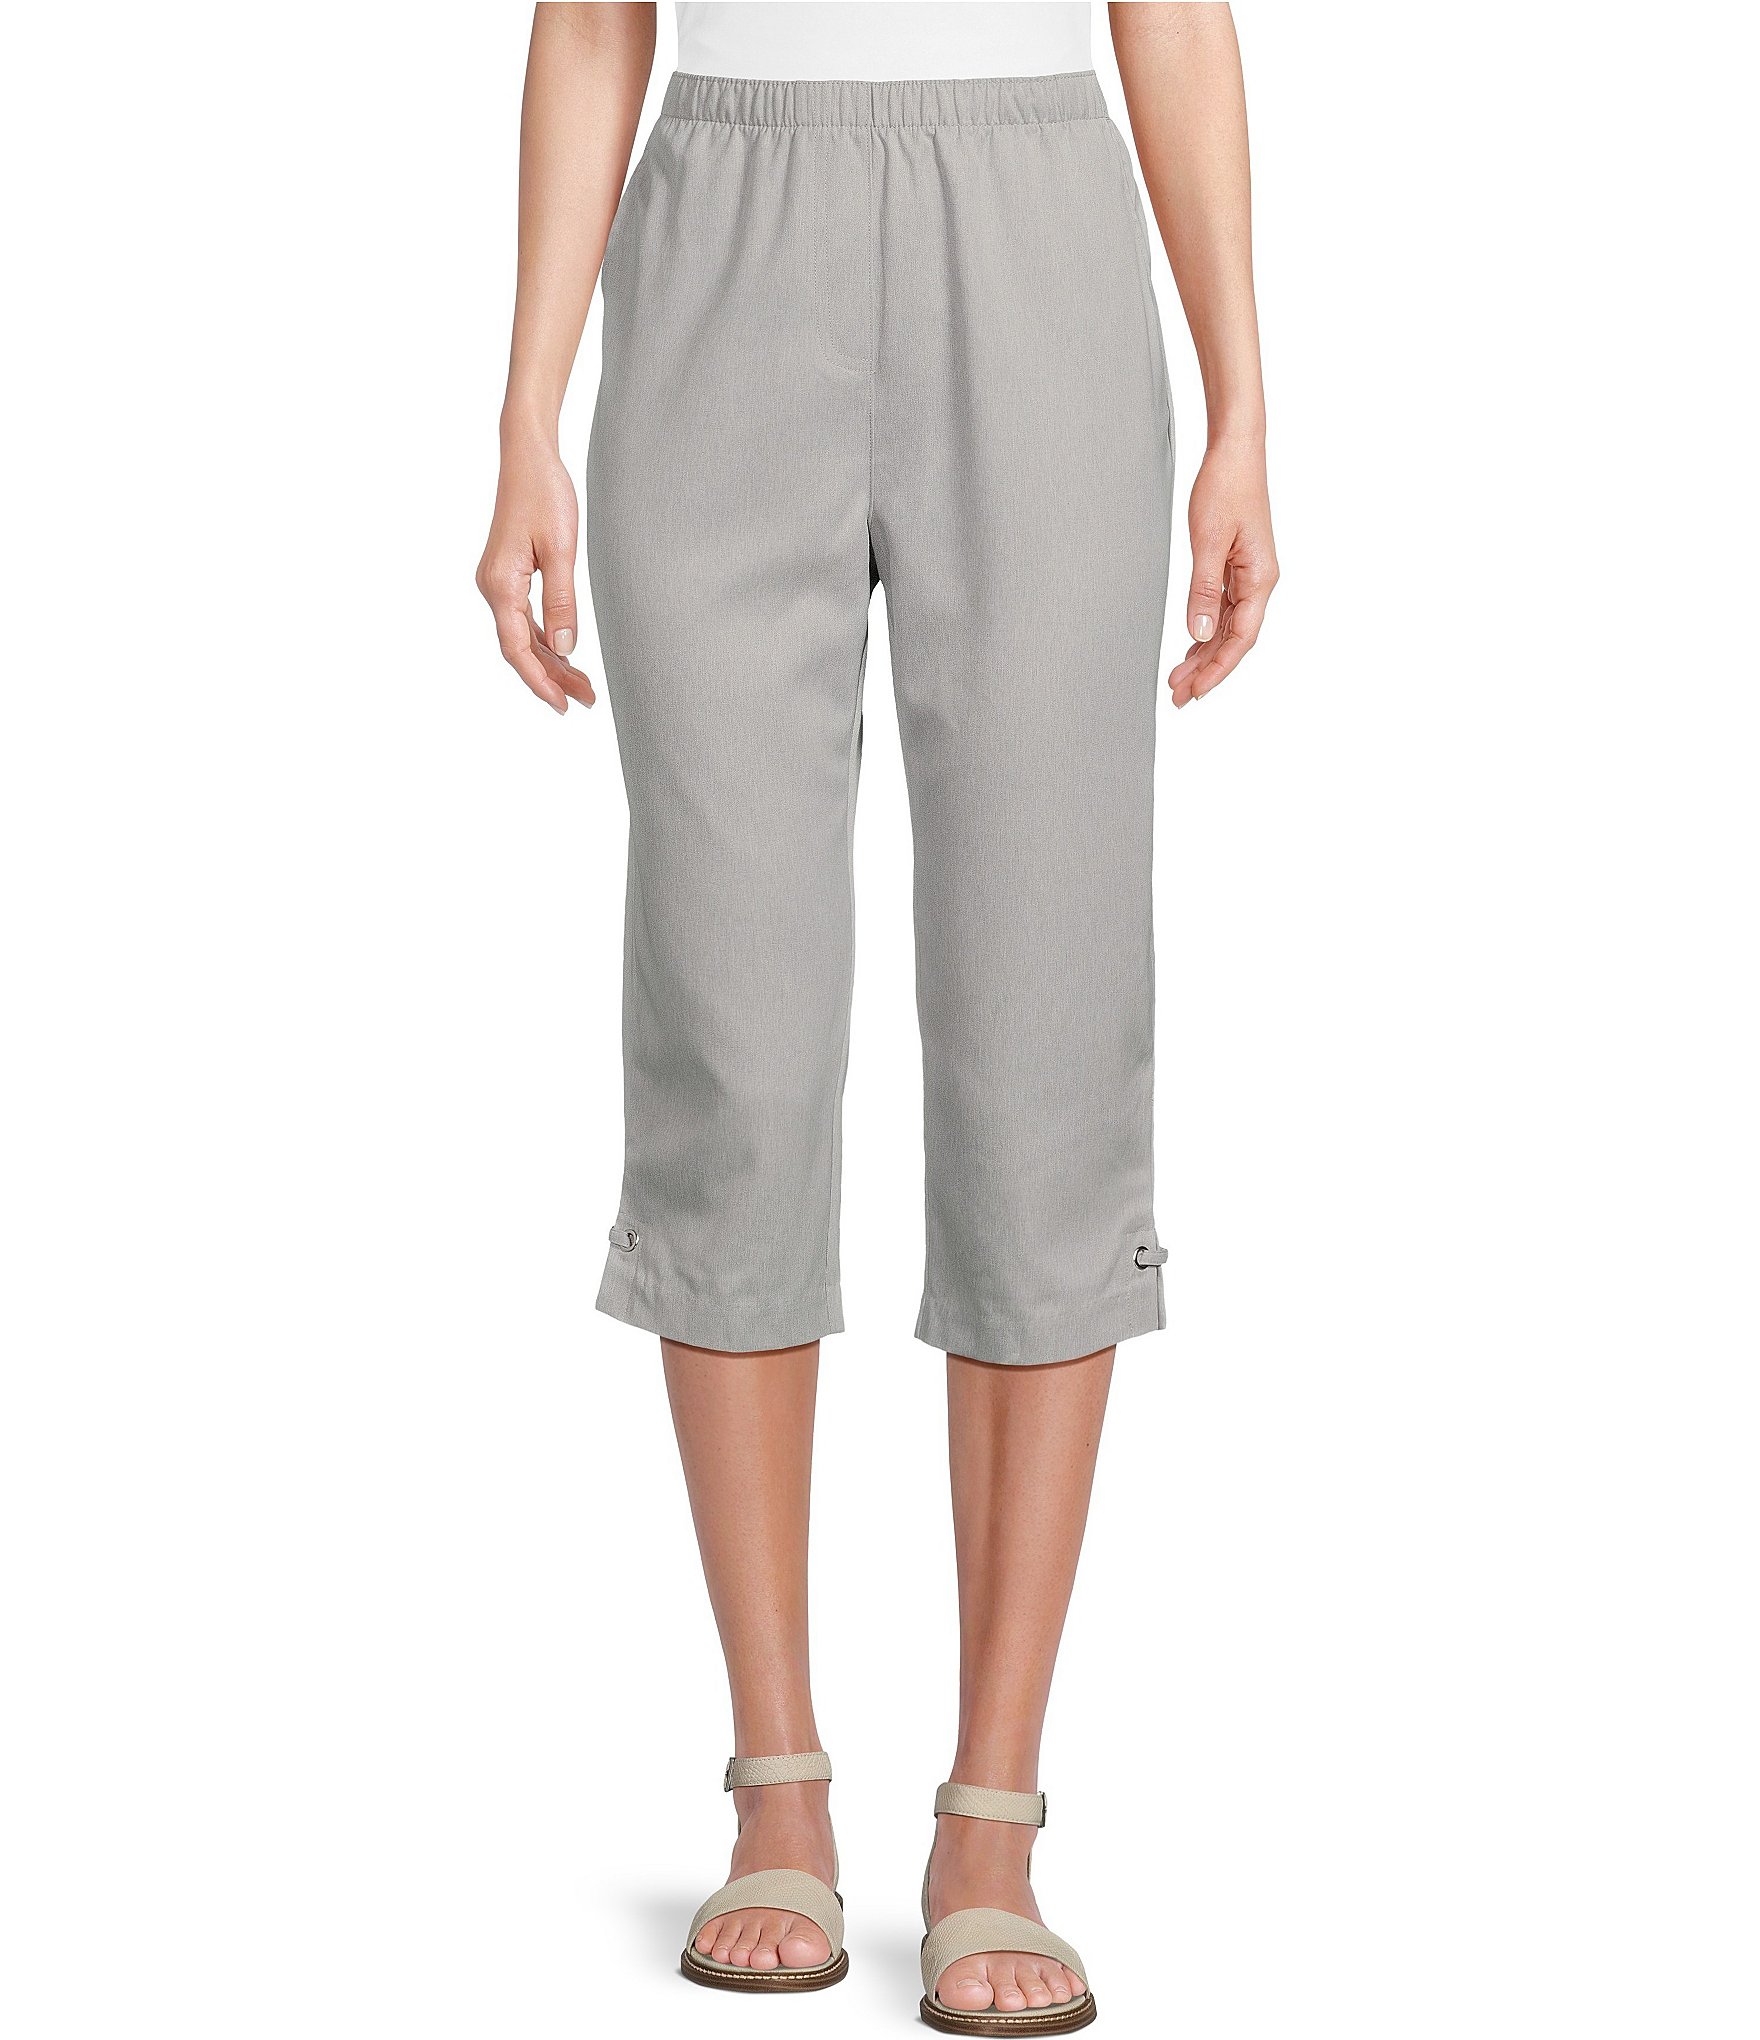 petite capri pants: Petite Pants: Casual, Workwear, & Dressy